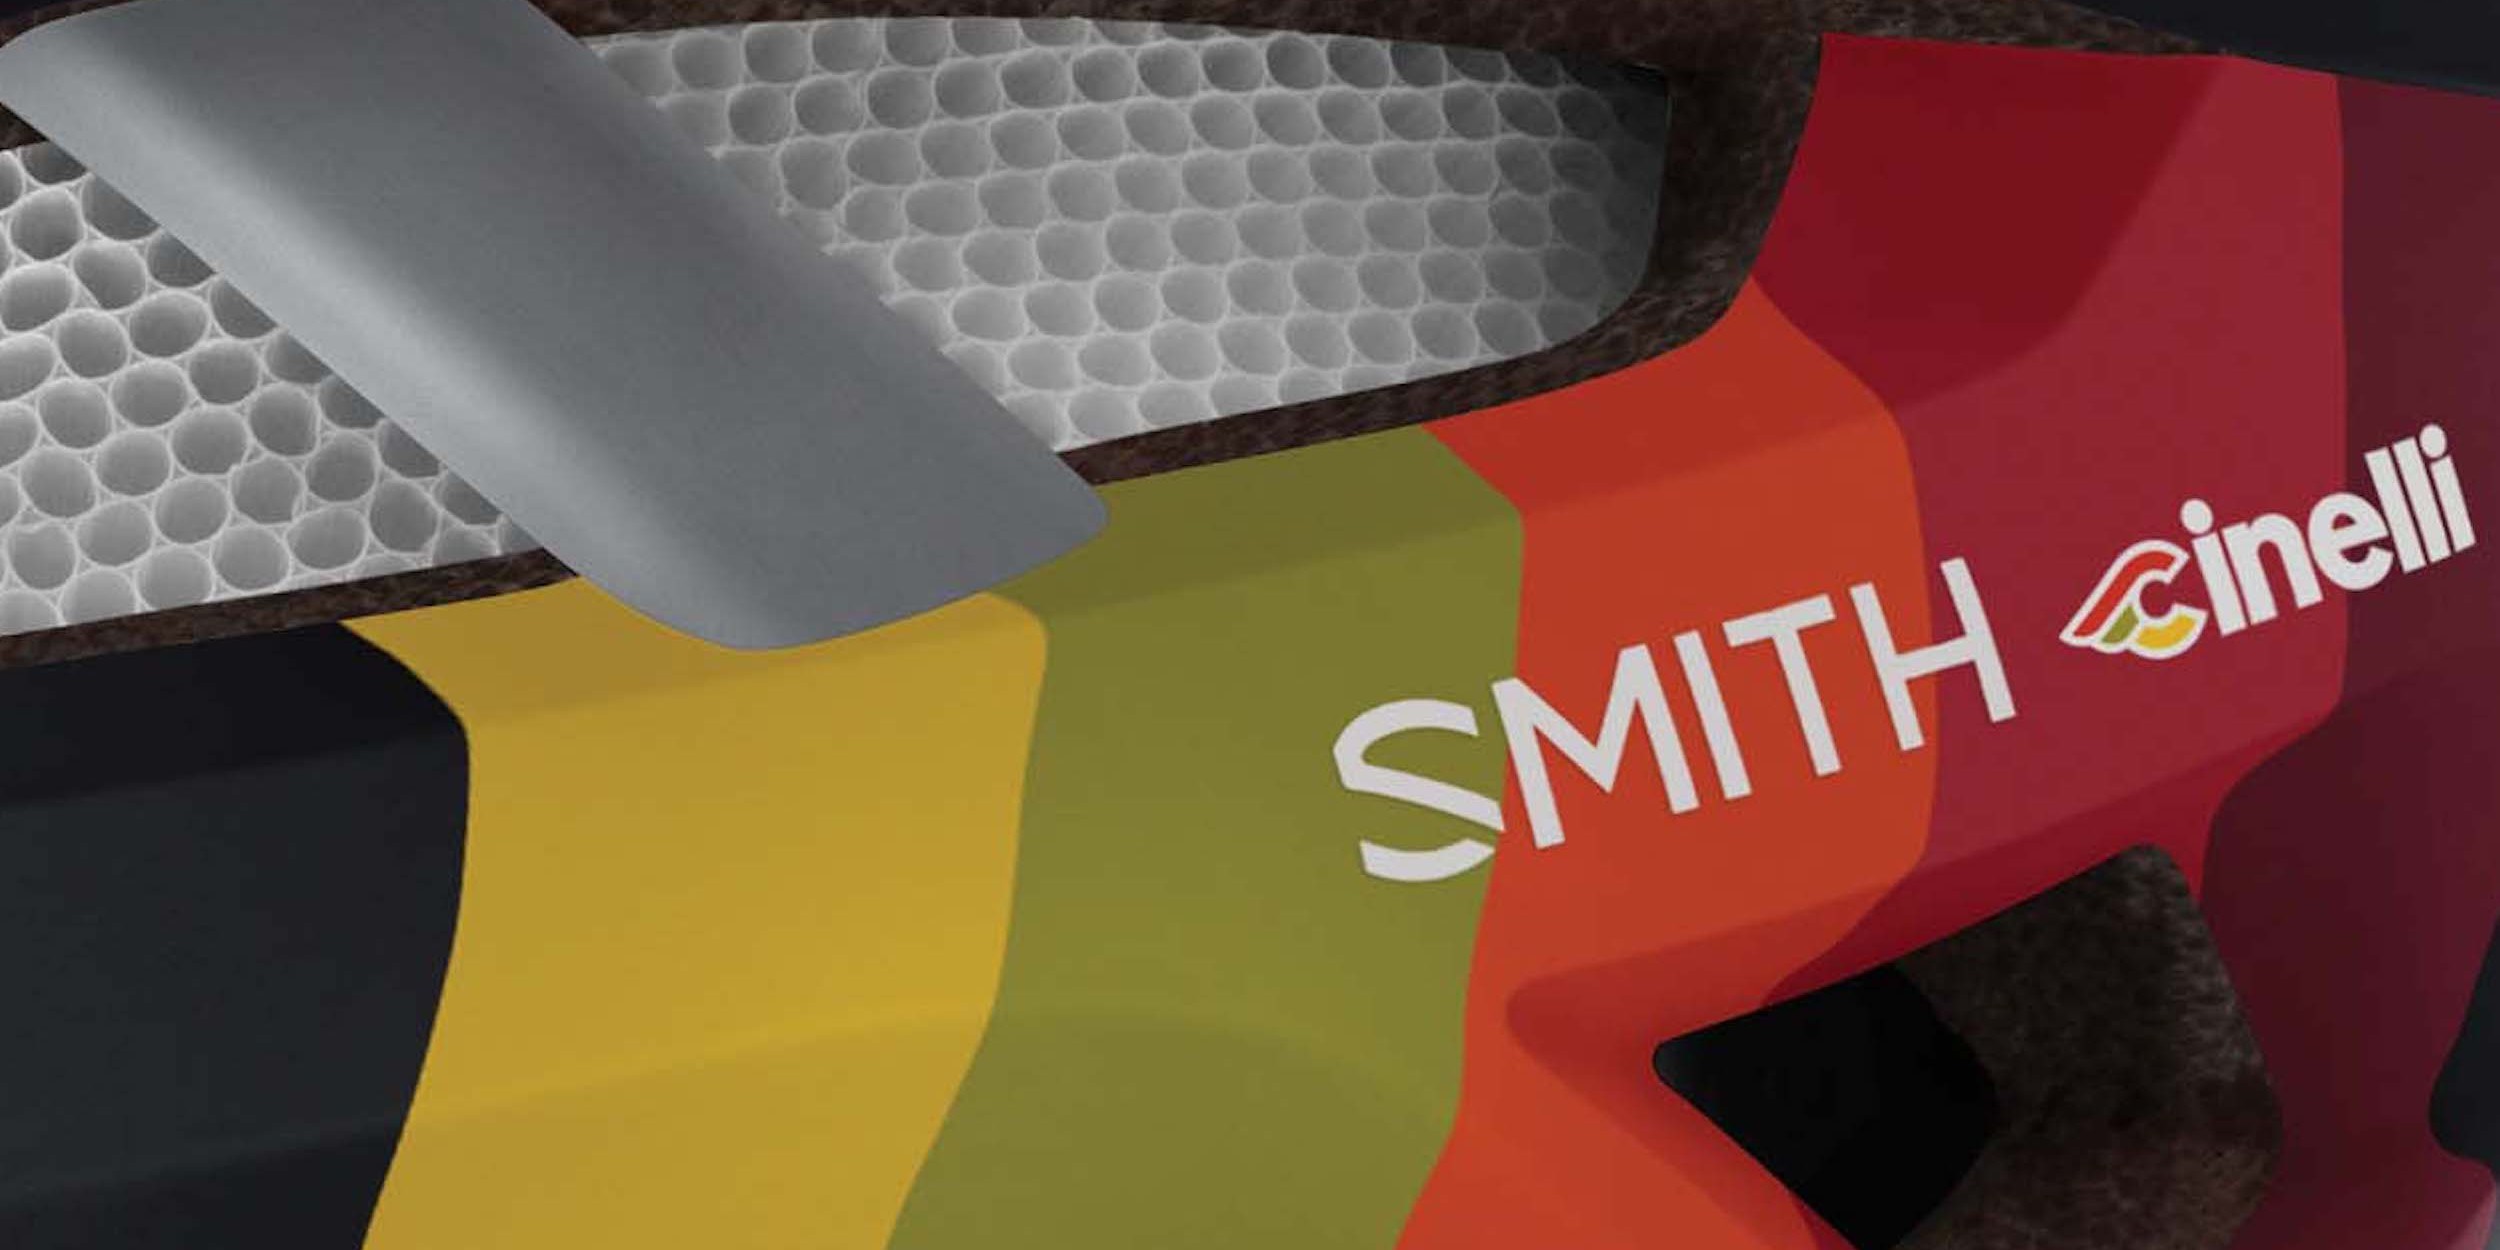 Smith Network & Portal